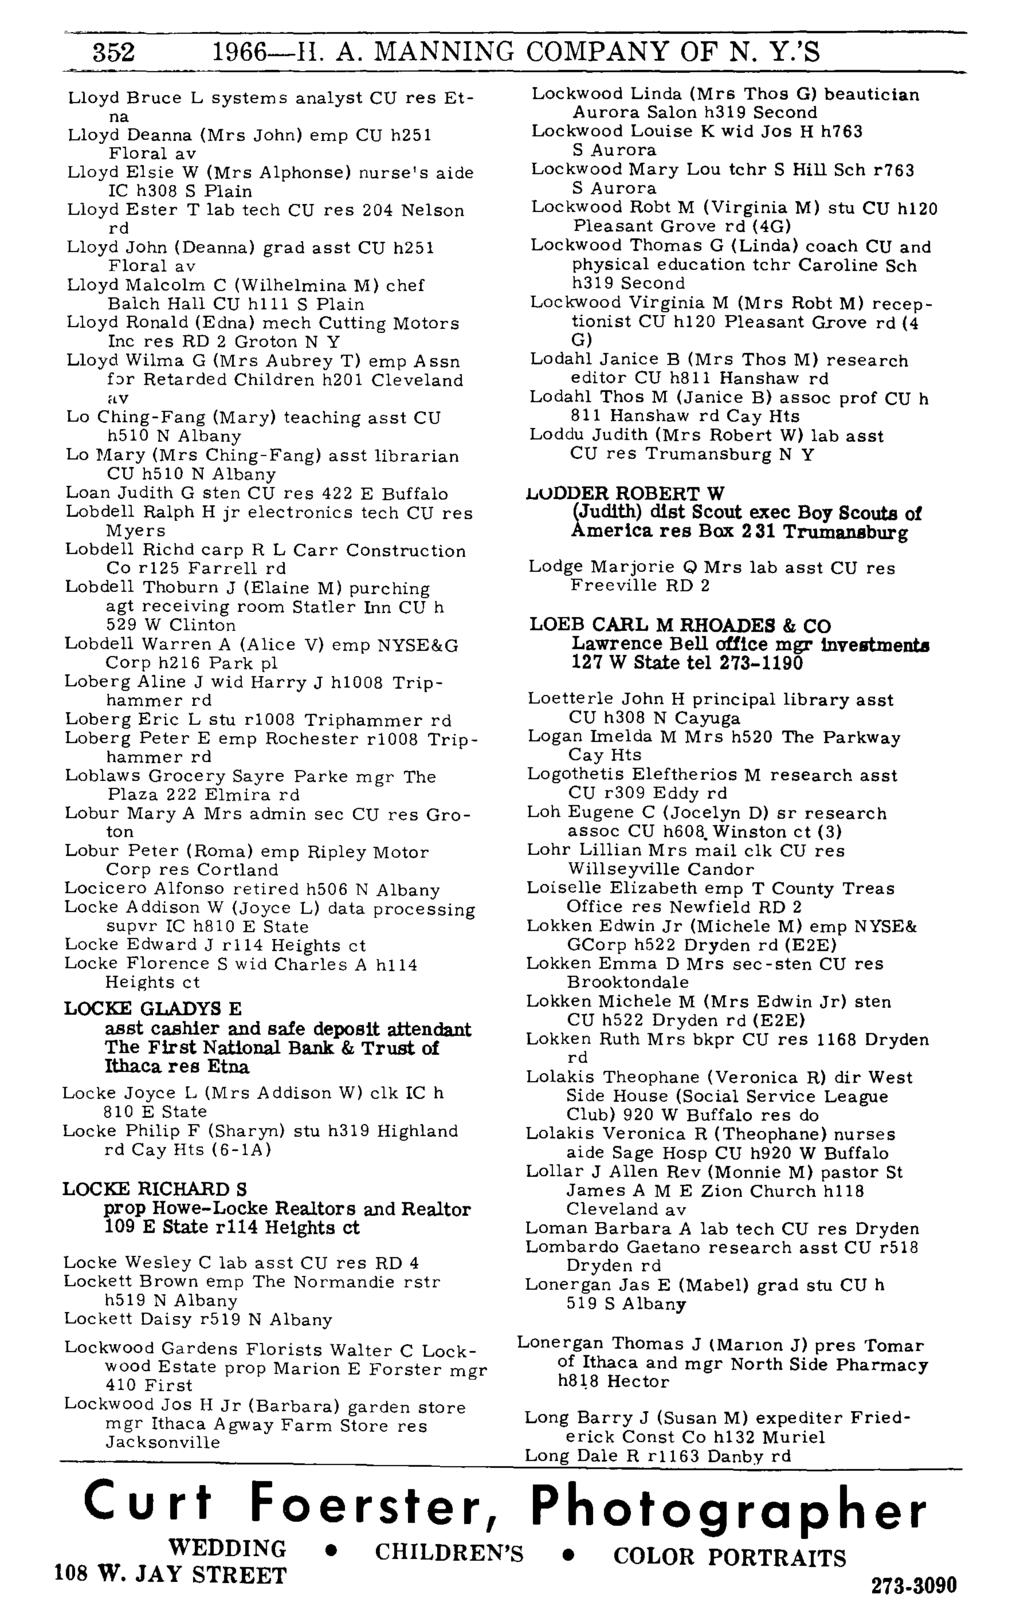 352 1966-H. A. MANNING COMPANY OF N. Y.